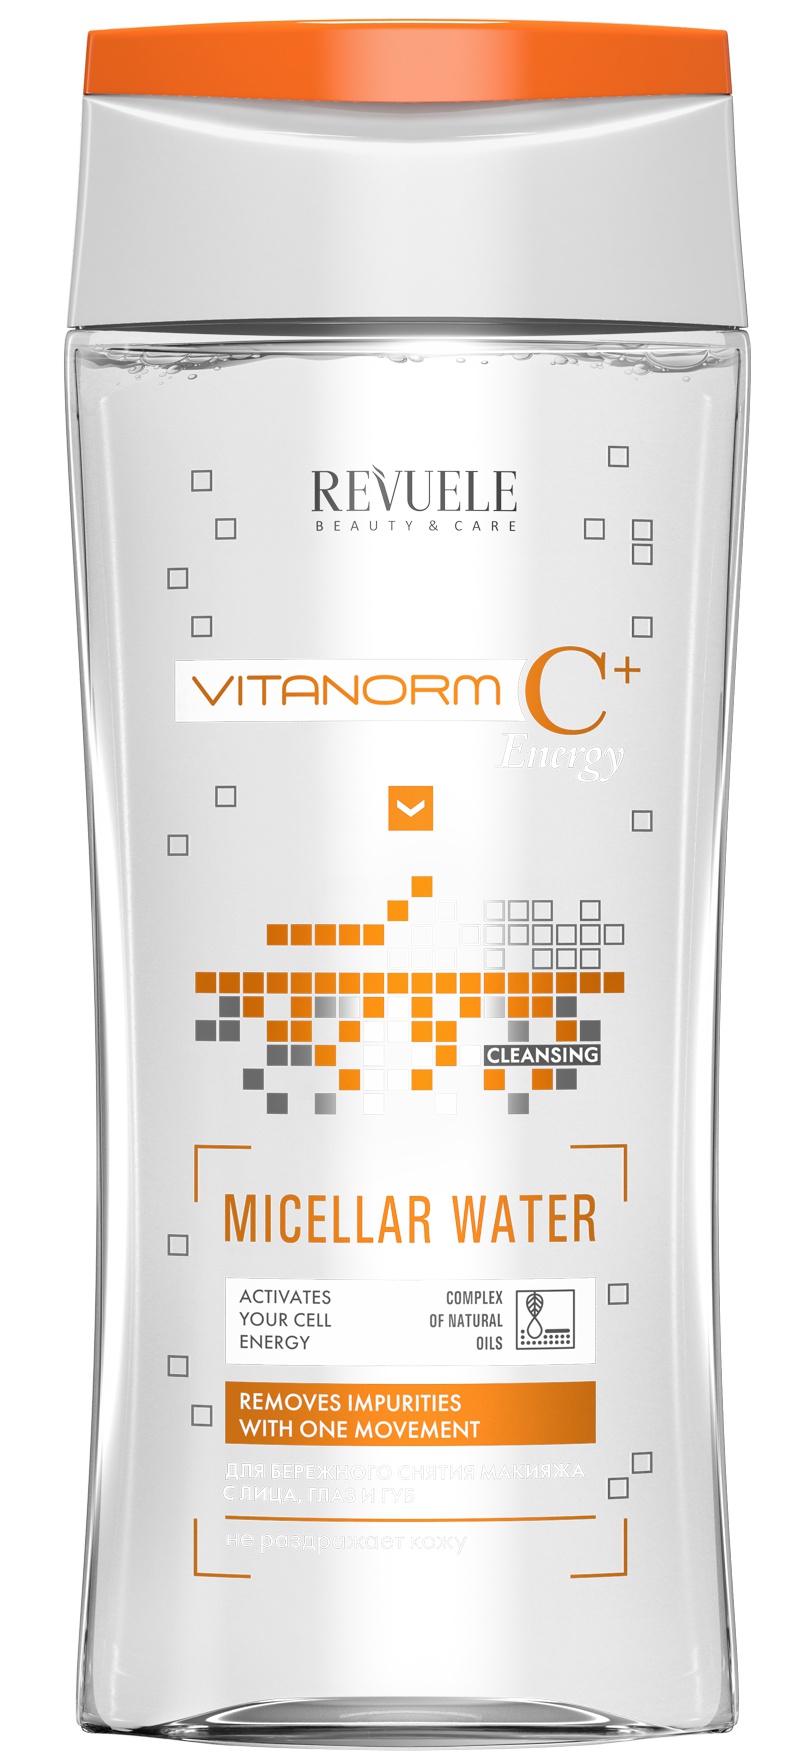 Revuele Vitanorm C+ Energy Micellar Water